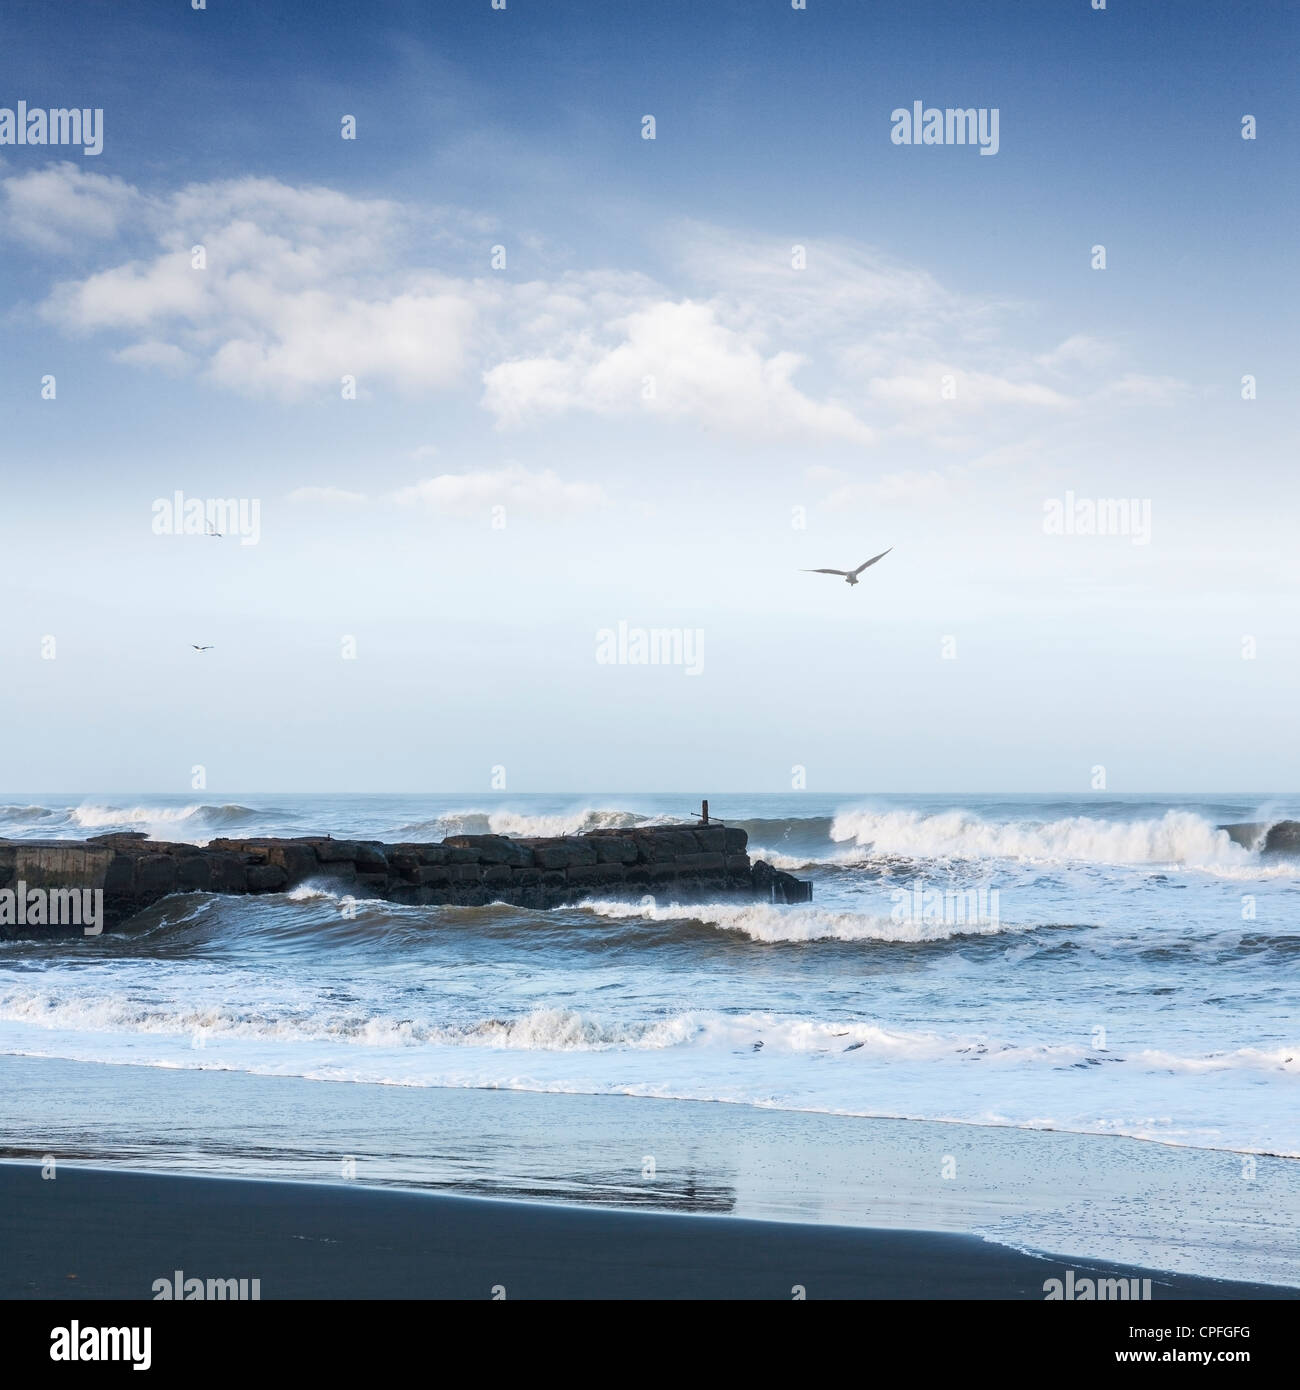 Wild sea and stormy sky with old jetty and seagulls in flight., Patea beach, Taranaki, New Zealand Stock Photo